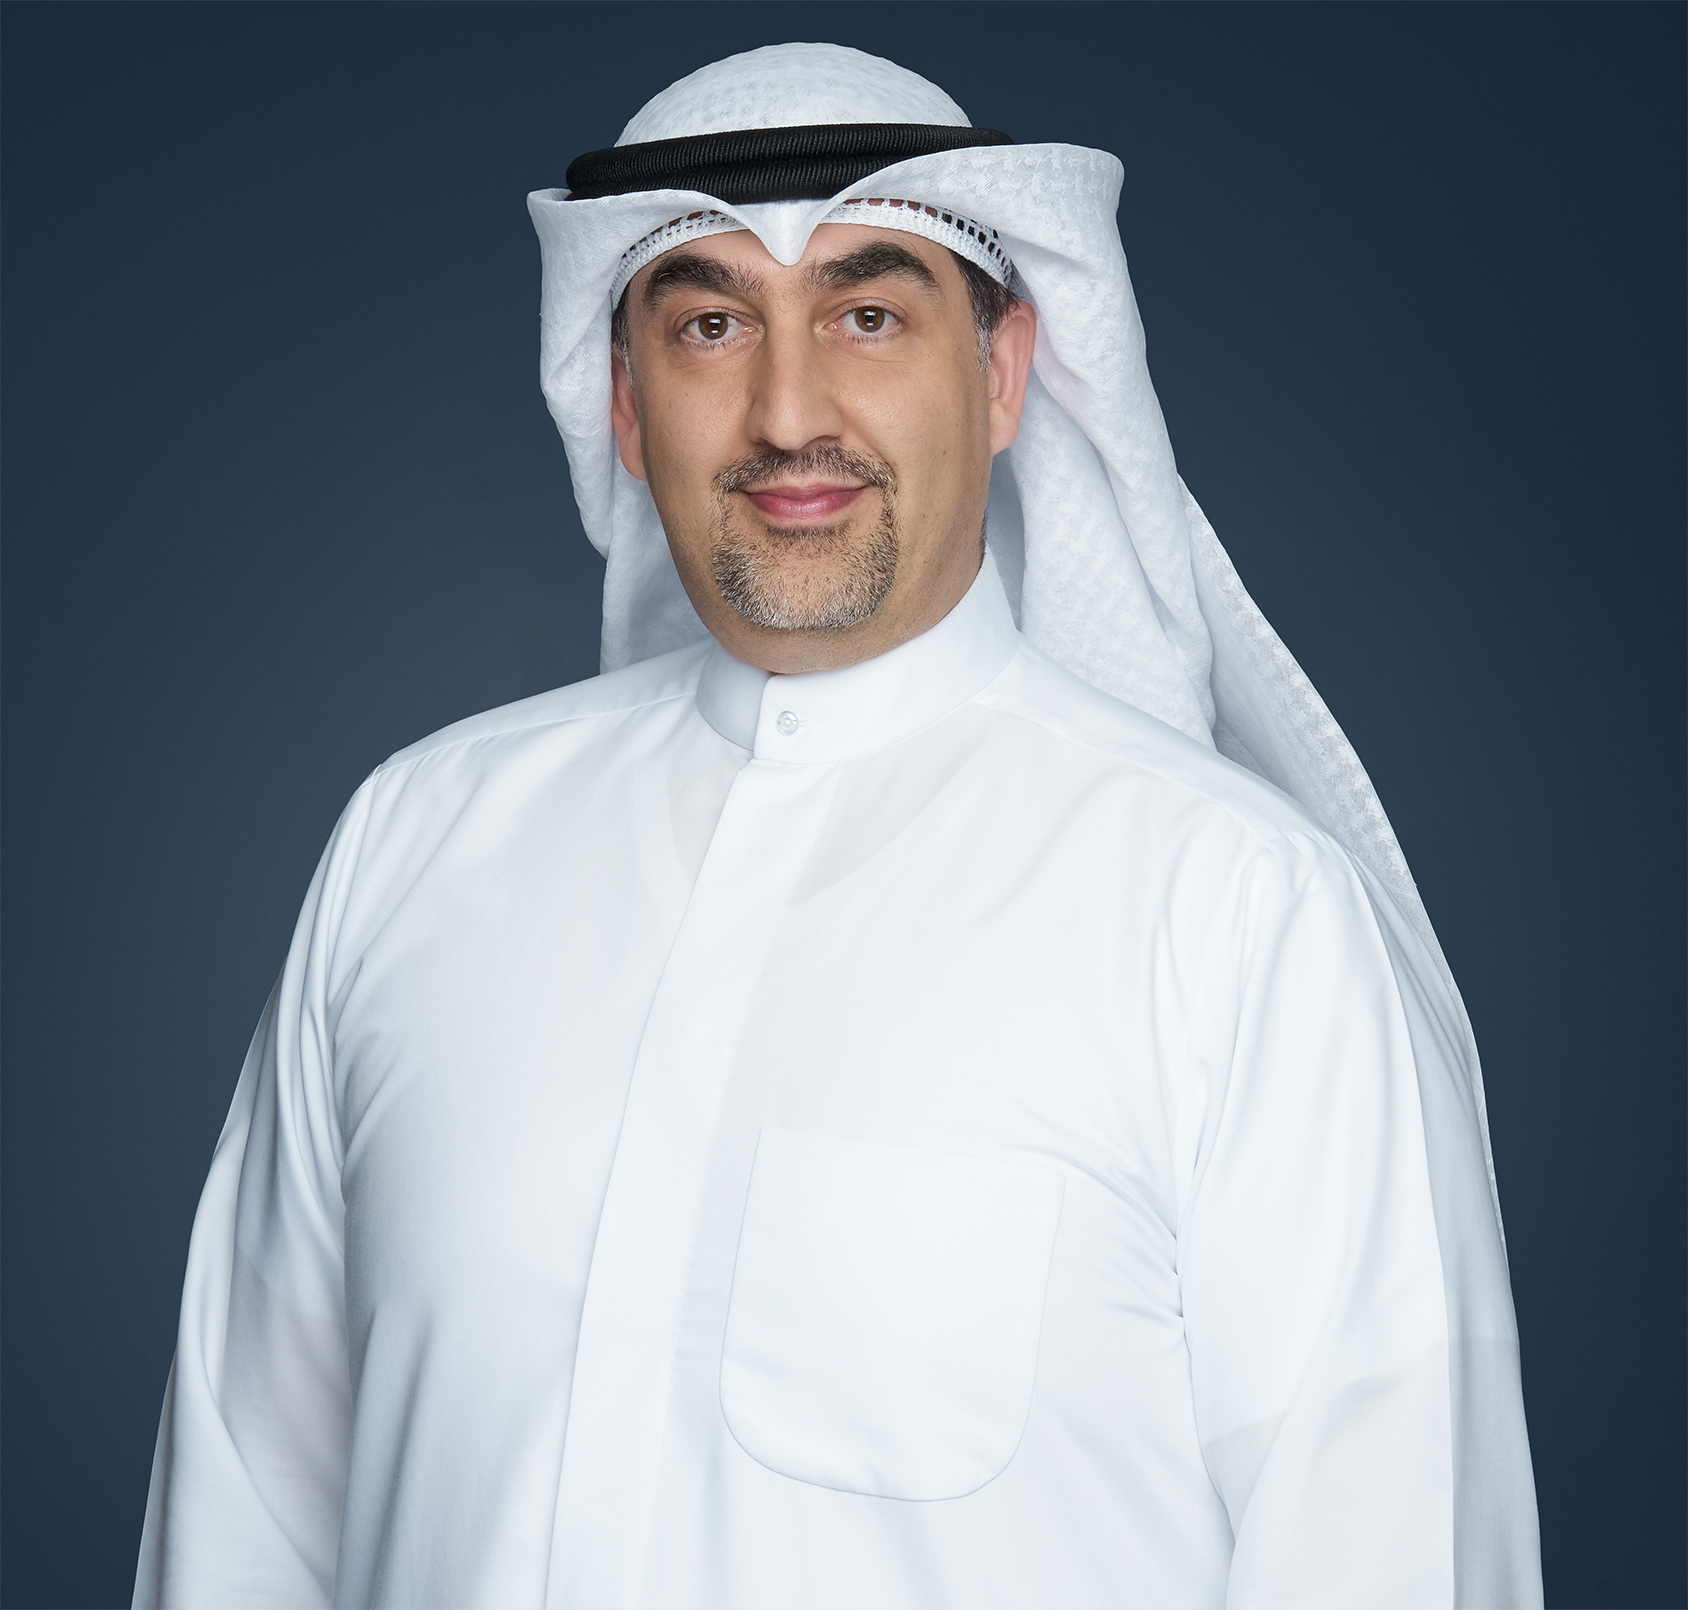 Bader Abdulla Al-Kandari